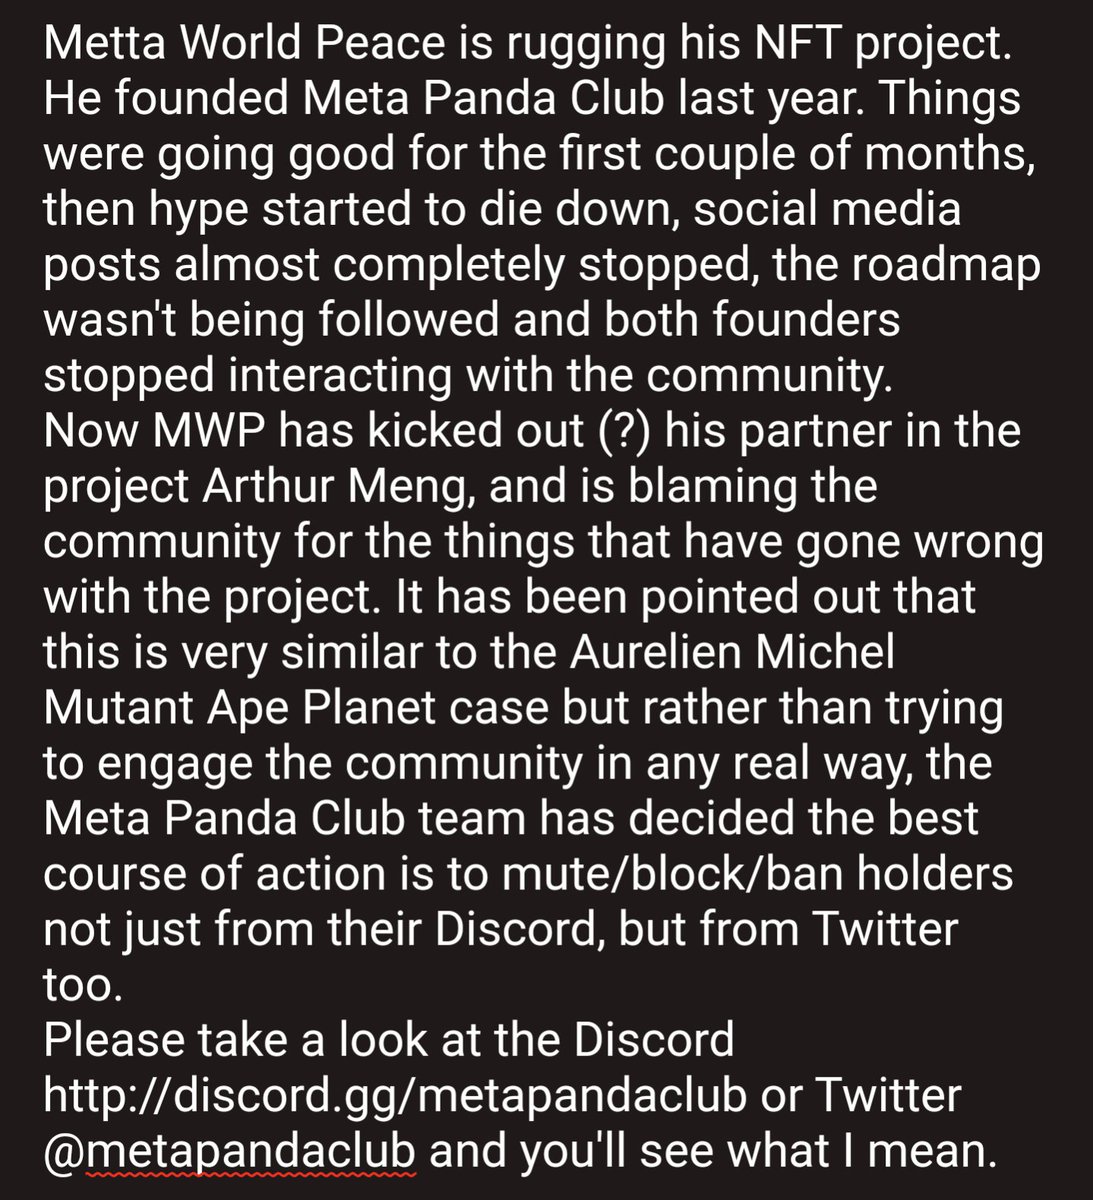 Daily reminder that @metapandaclub by @xvsxsports and @MettaWorld37 is a rugpull 

#nft #NFTCommunity #rugpull #rugpullcommunity #NBA https://t.co/lDStKkEGKZ